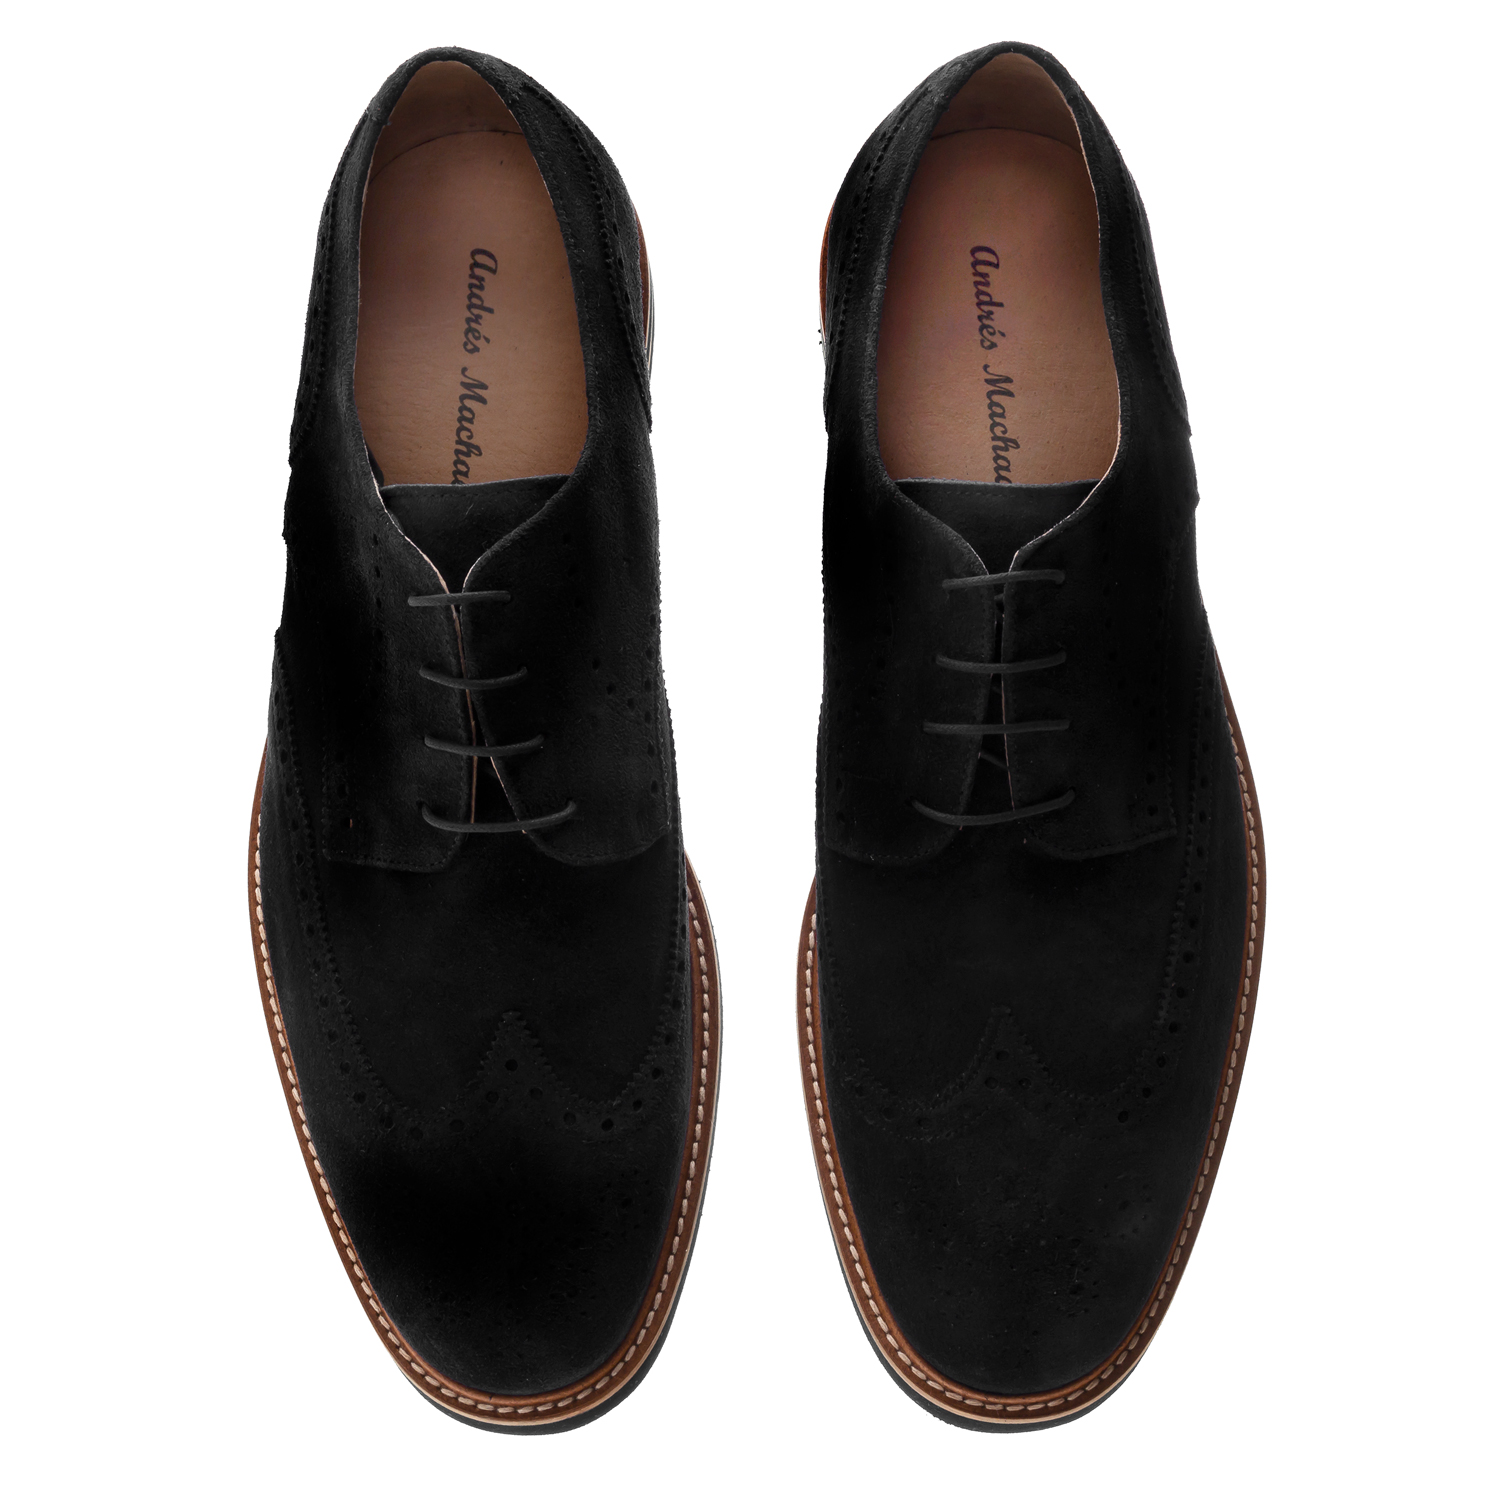 Oxford Shoes in Black genuine Split Leather 